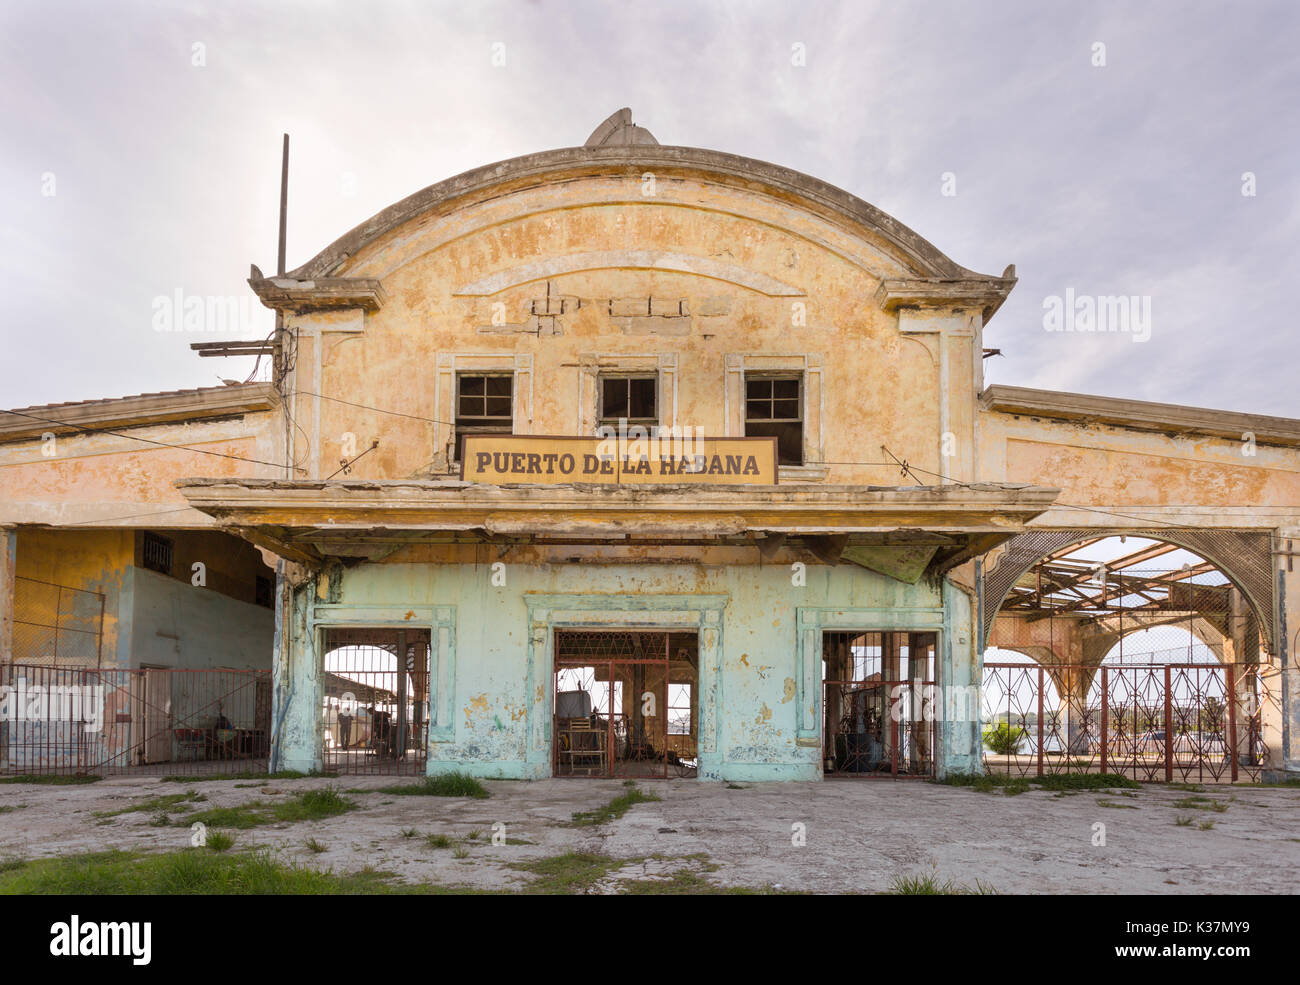 Old port building 'Puerto de la Habana' in Regla, Havana, Cuba Stock Photo